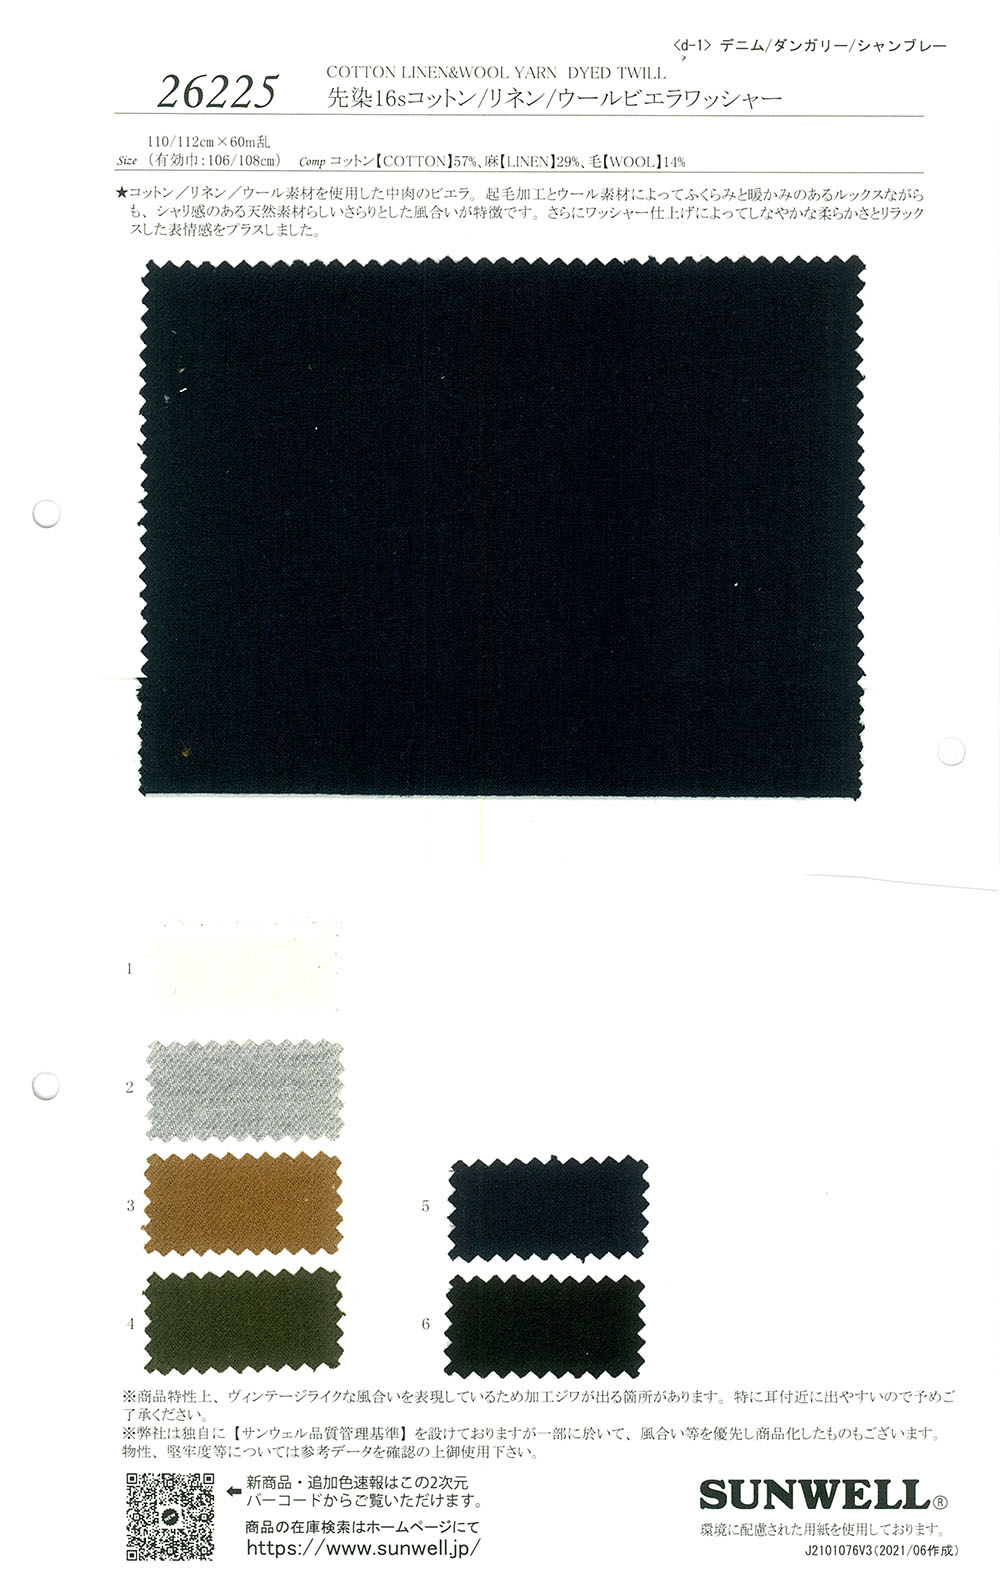 26225 Yarn Dyed 16 Single Thread Cotton/linen/wool Viyella Washer Processing[Textile / Fabric] SUNWELL